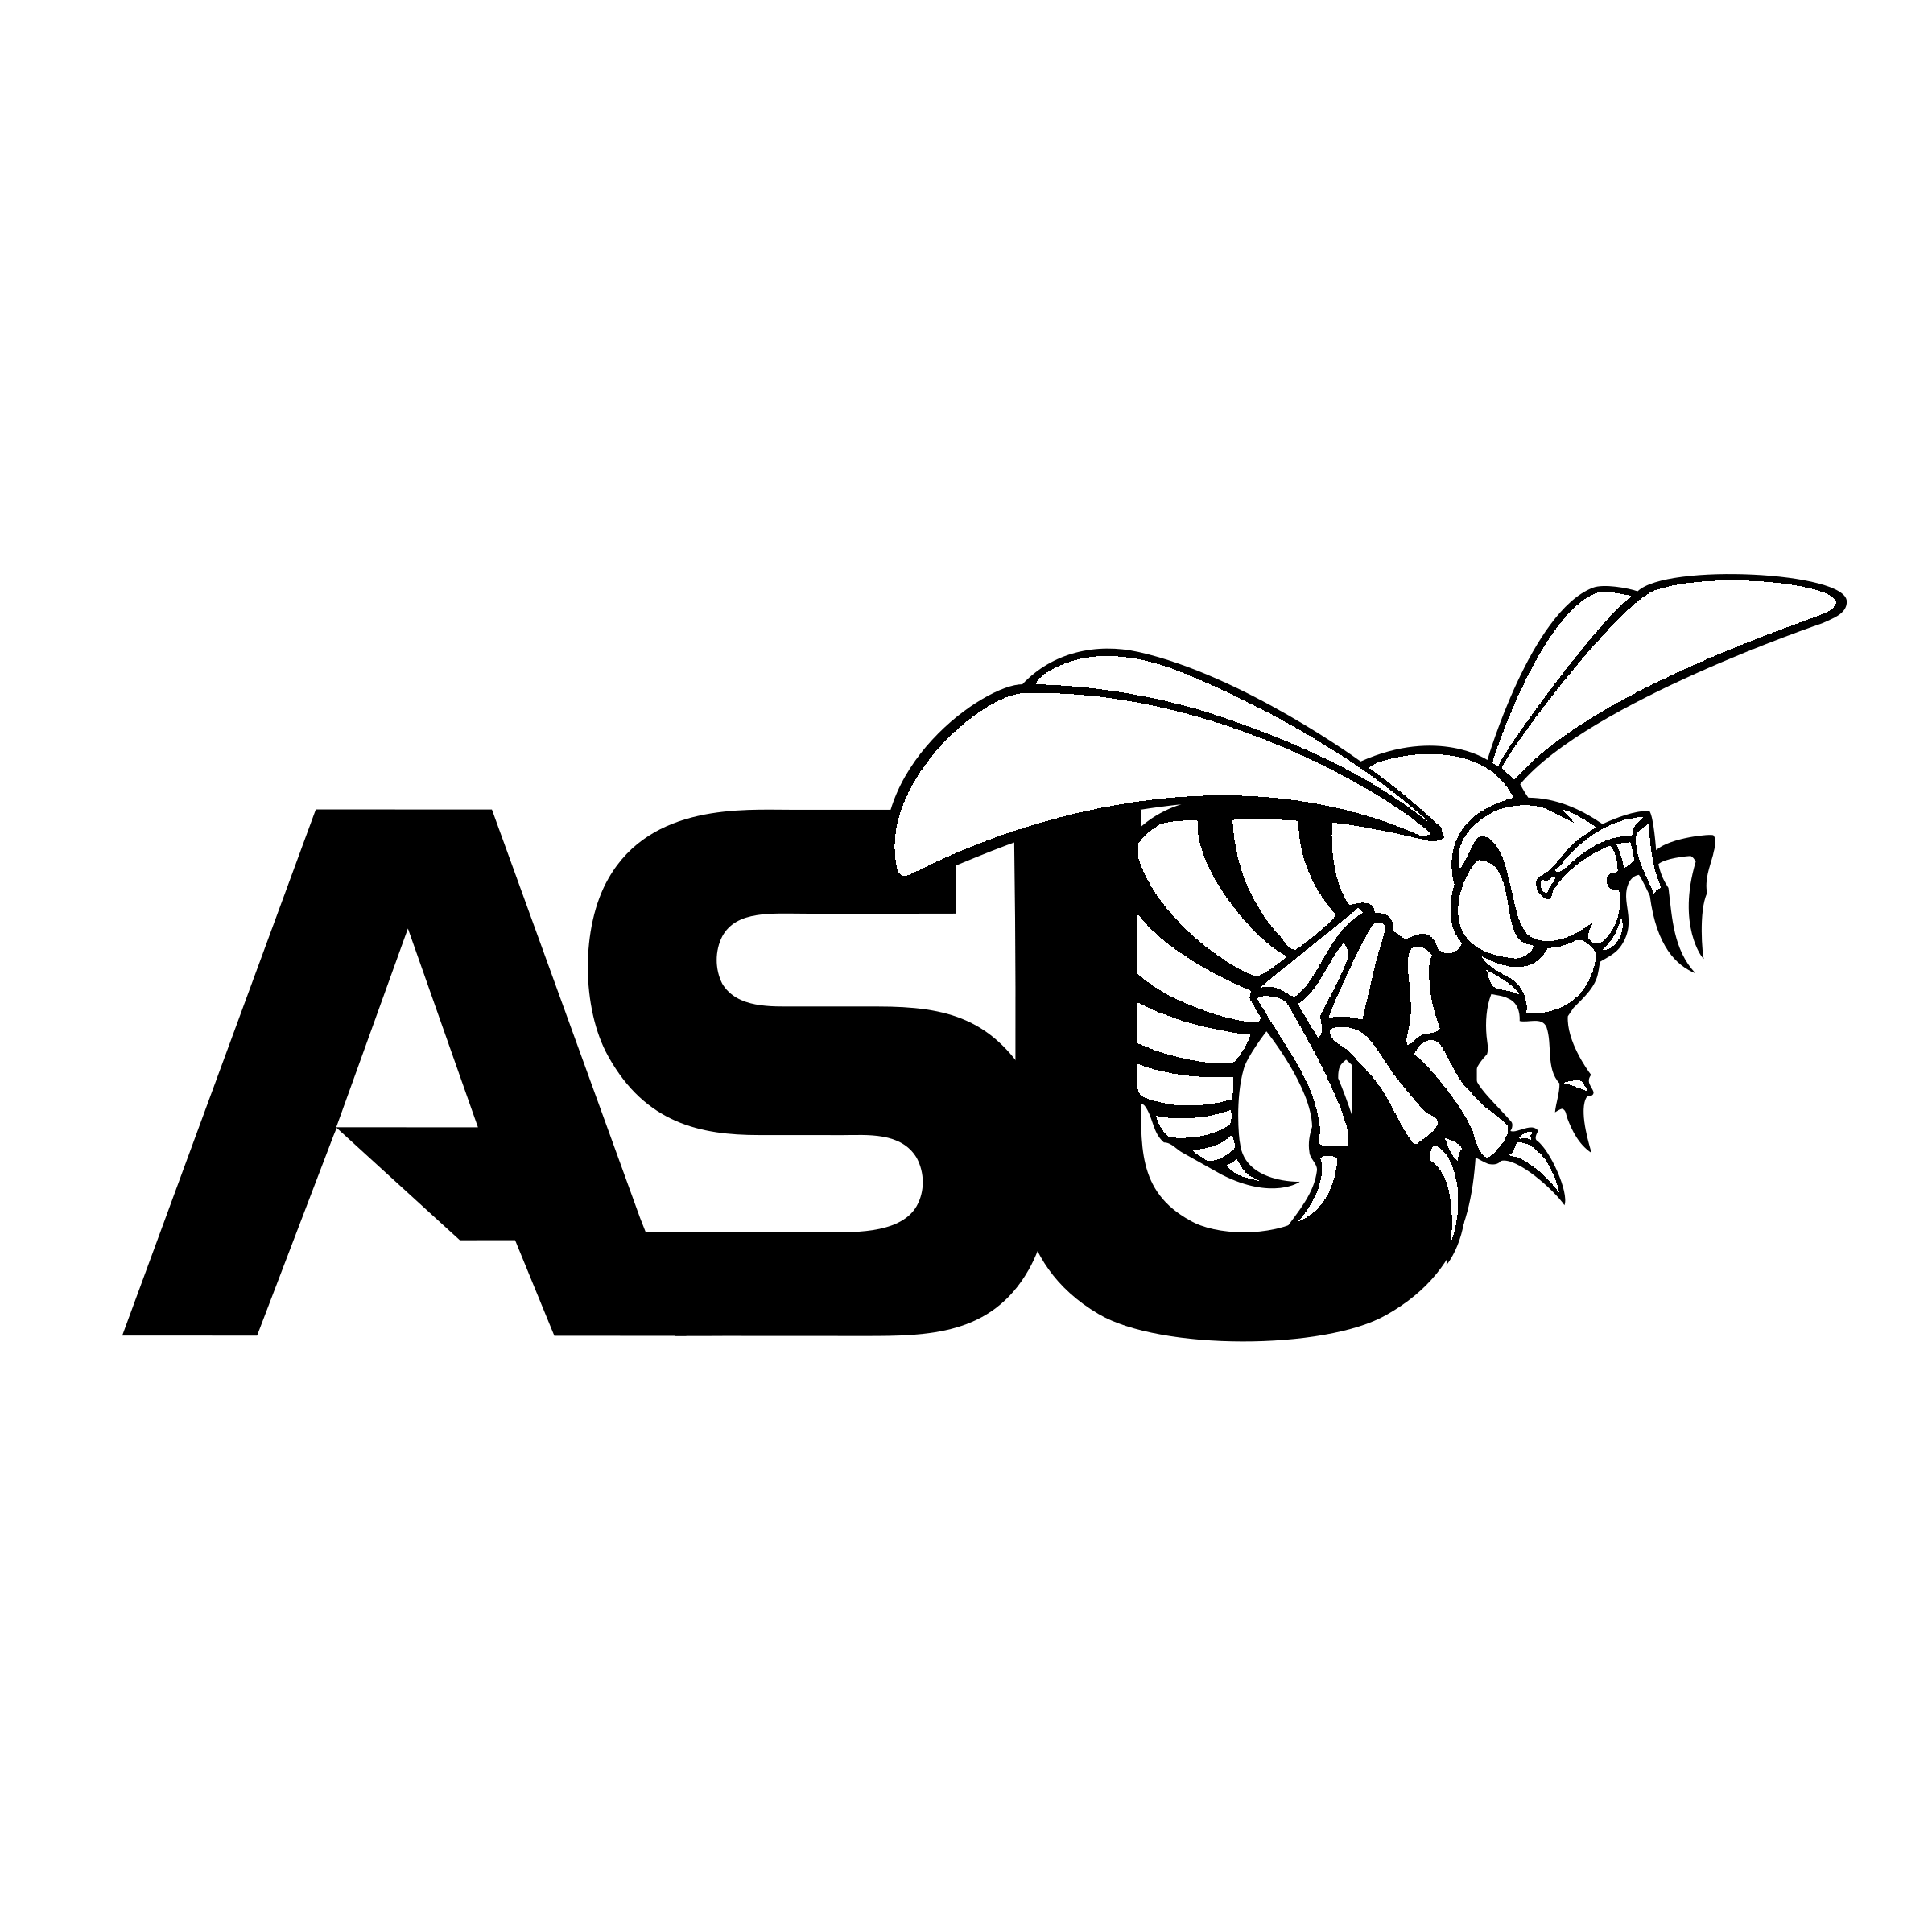 Black and White Alabama Logo - Alabama State Hornets Logo PNG Transparent & SVG Vector - Freebie Supply